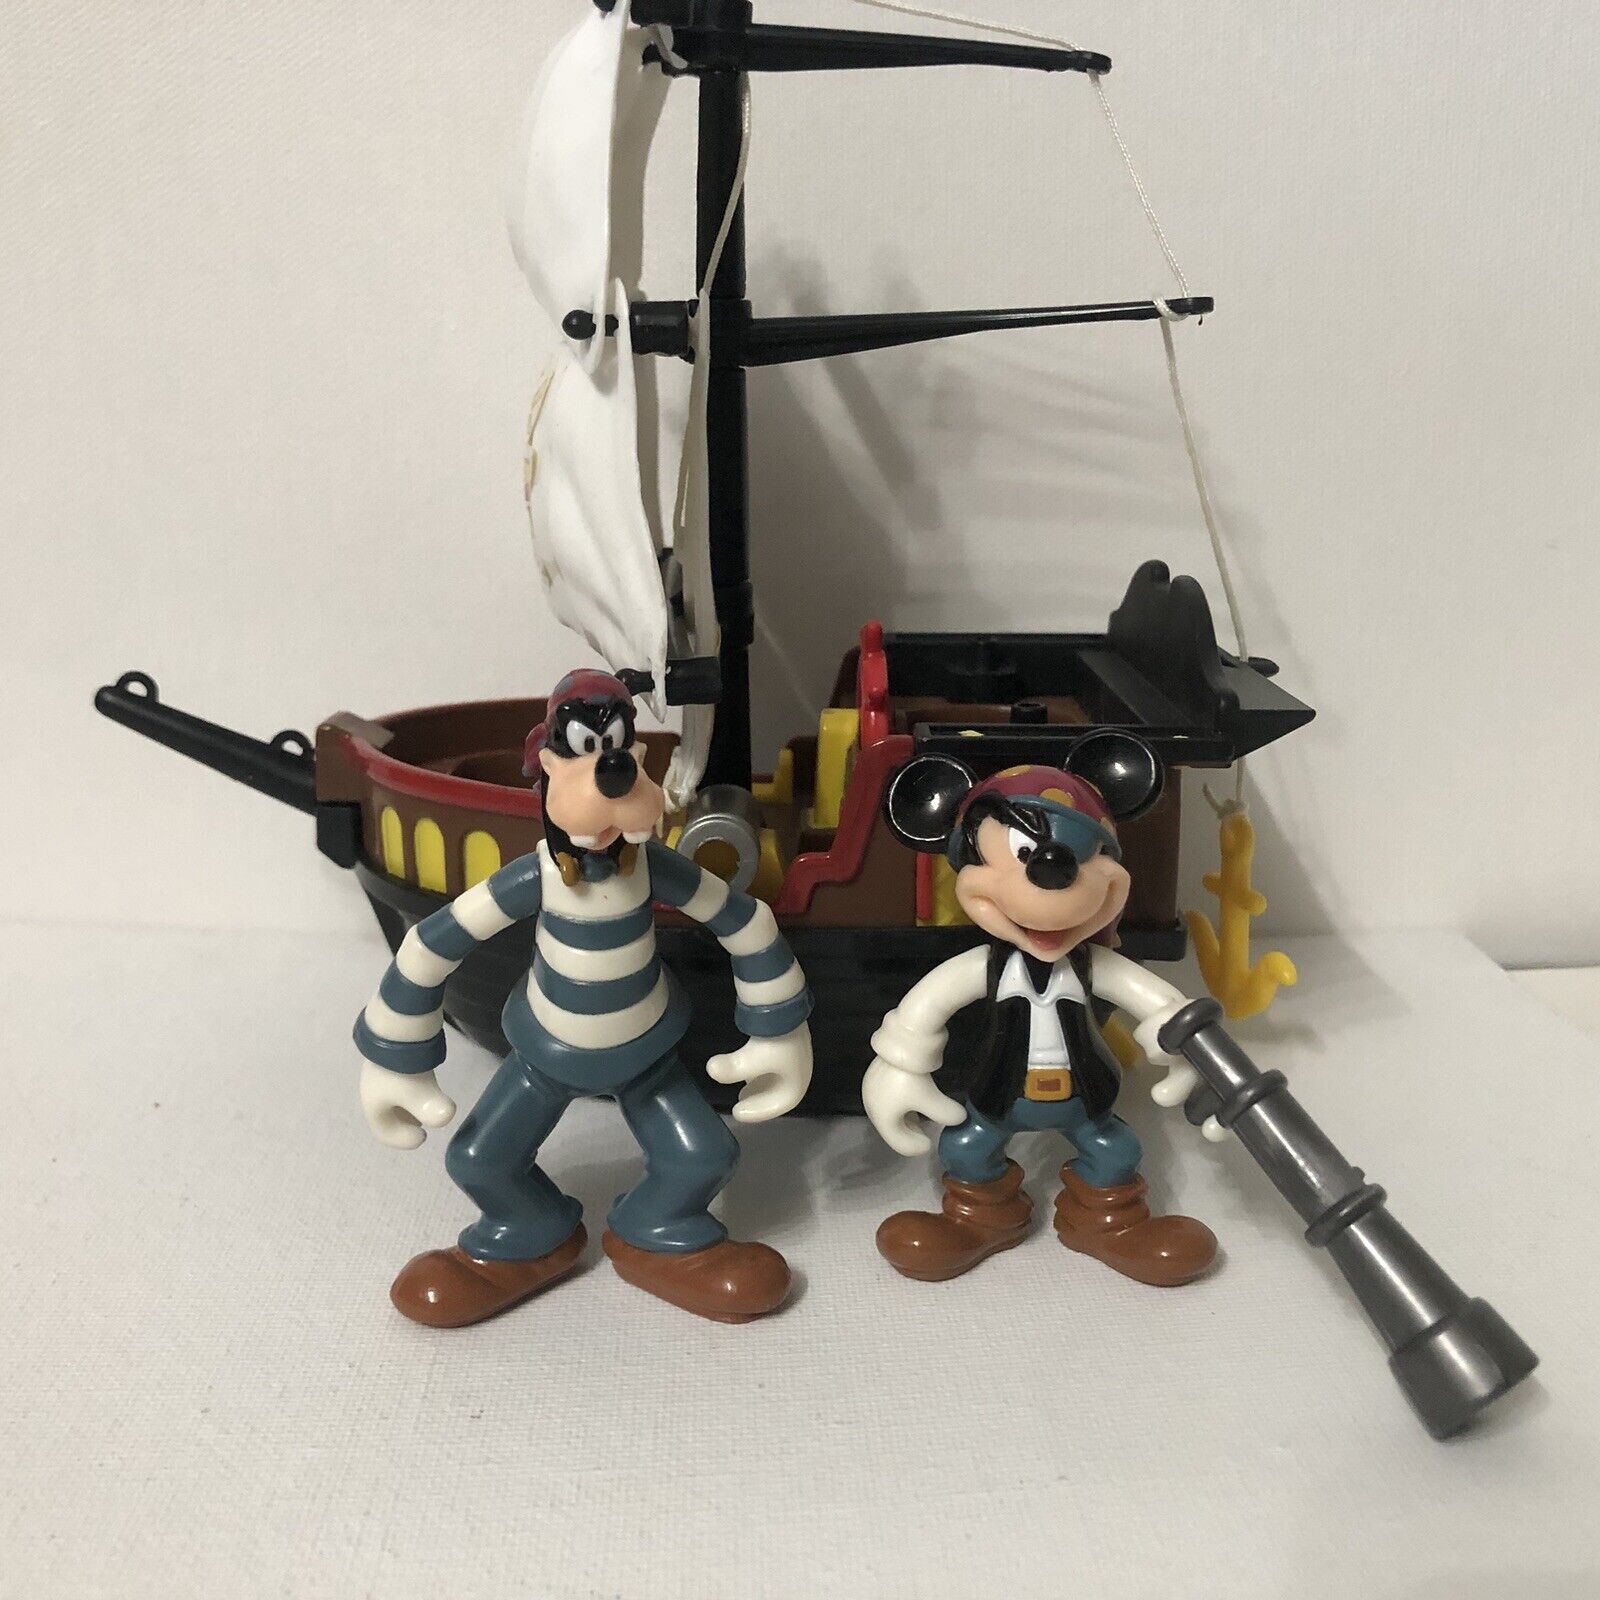 RARE Disney 2.5” Pirate Mickey Mouse & Goofy Toy COLLECTIBLE Kid Bonus Ship READ